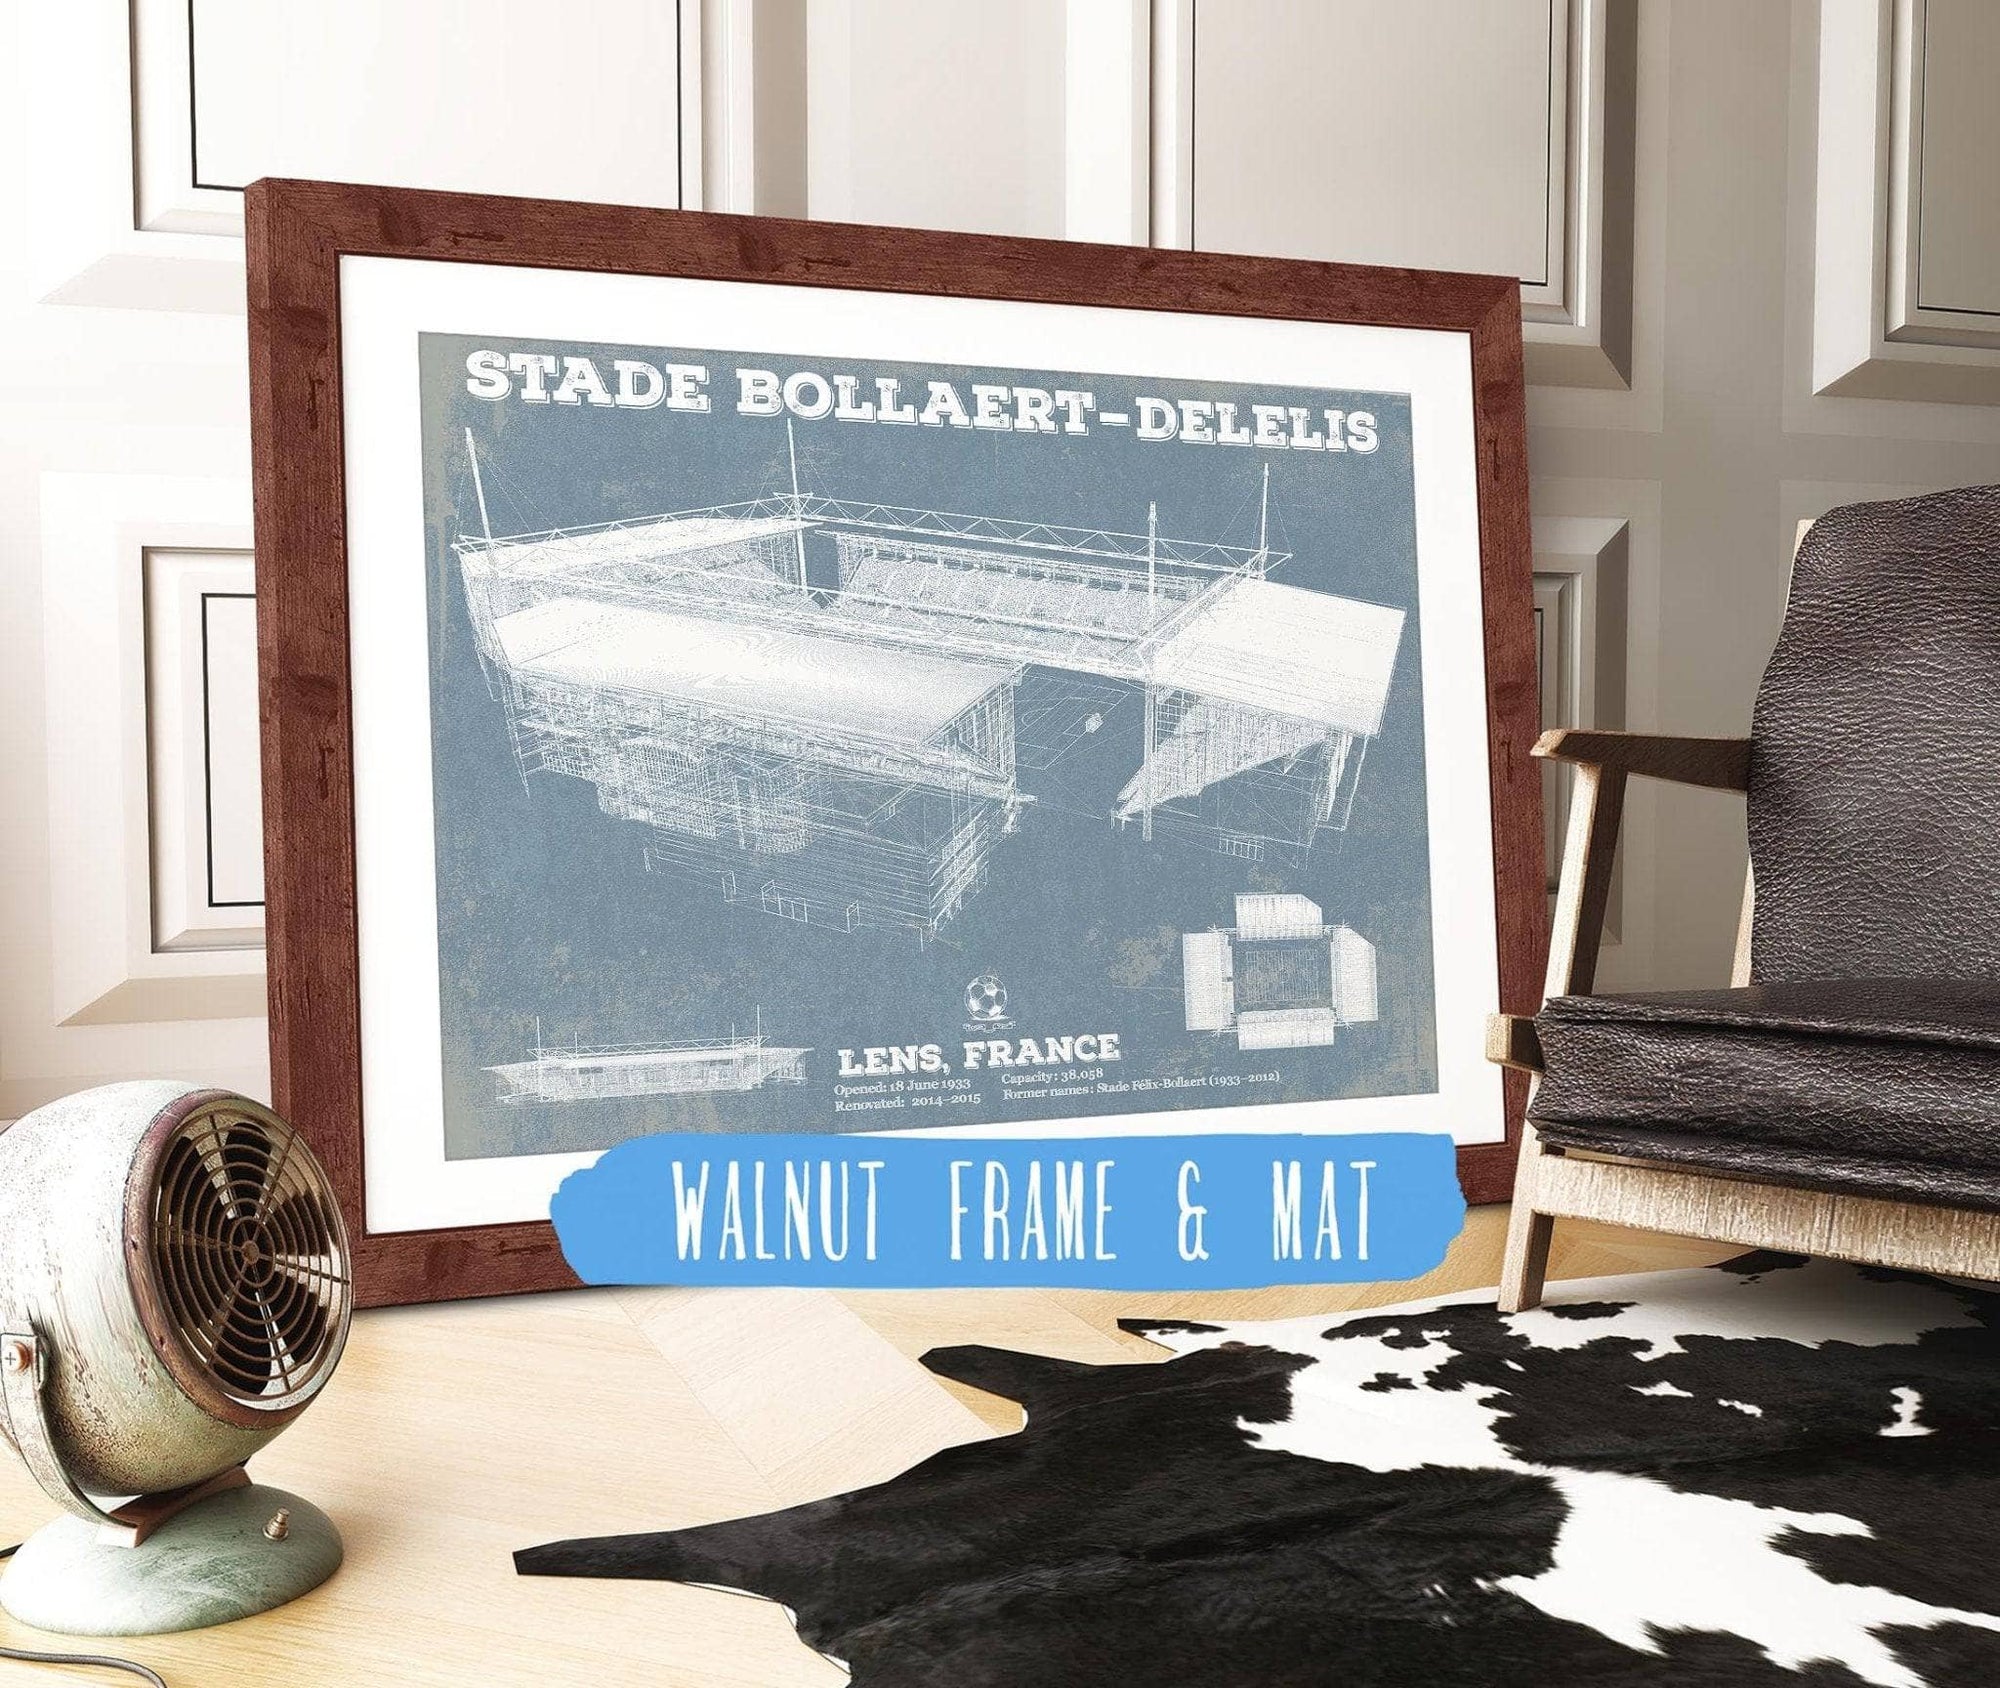 Cutler West Soccer Collection 14" x 11" / Walnut Frame & Mat Vintage RC Lens Stade Bollaert-Delelis Stadium Soccer Print 799609456-14"-x-11"12600